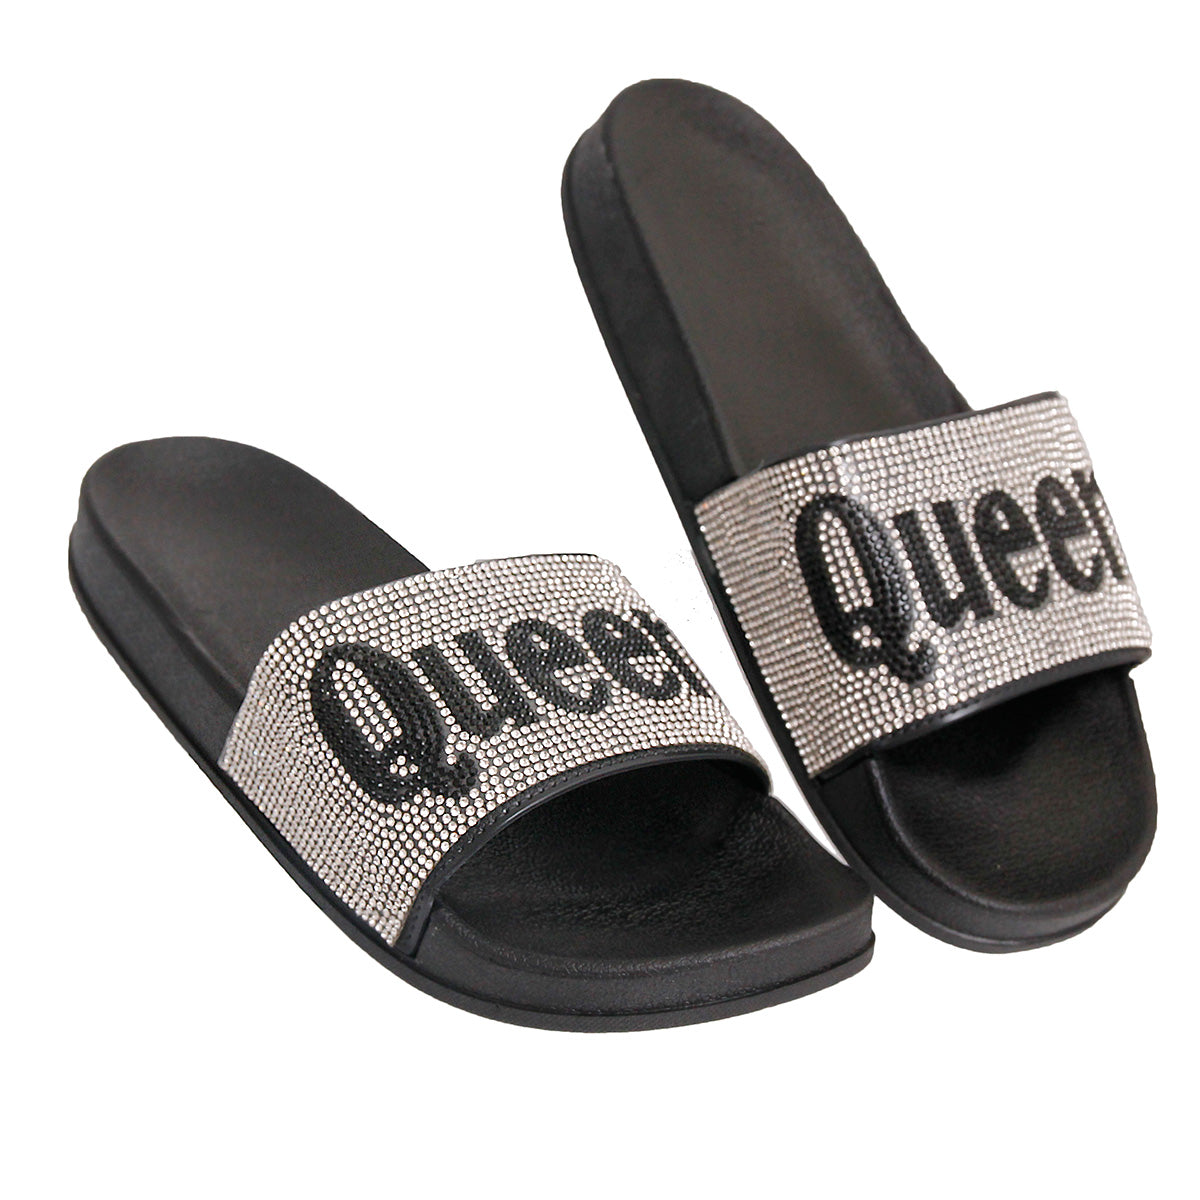 Size 7 Queen Silver Slides